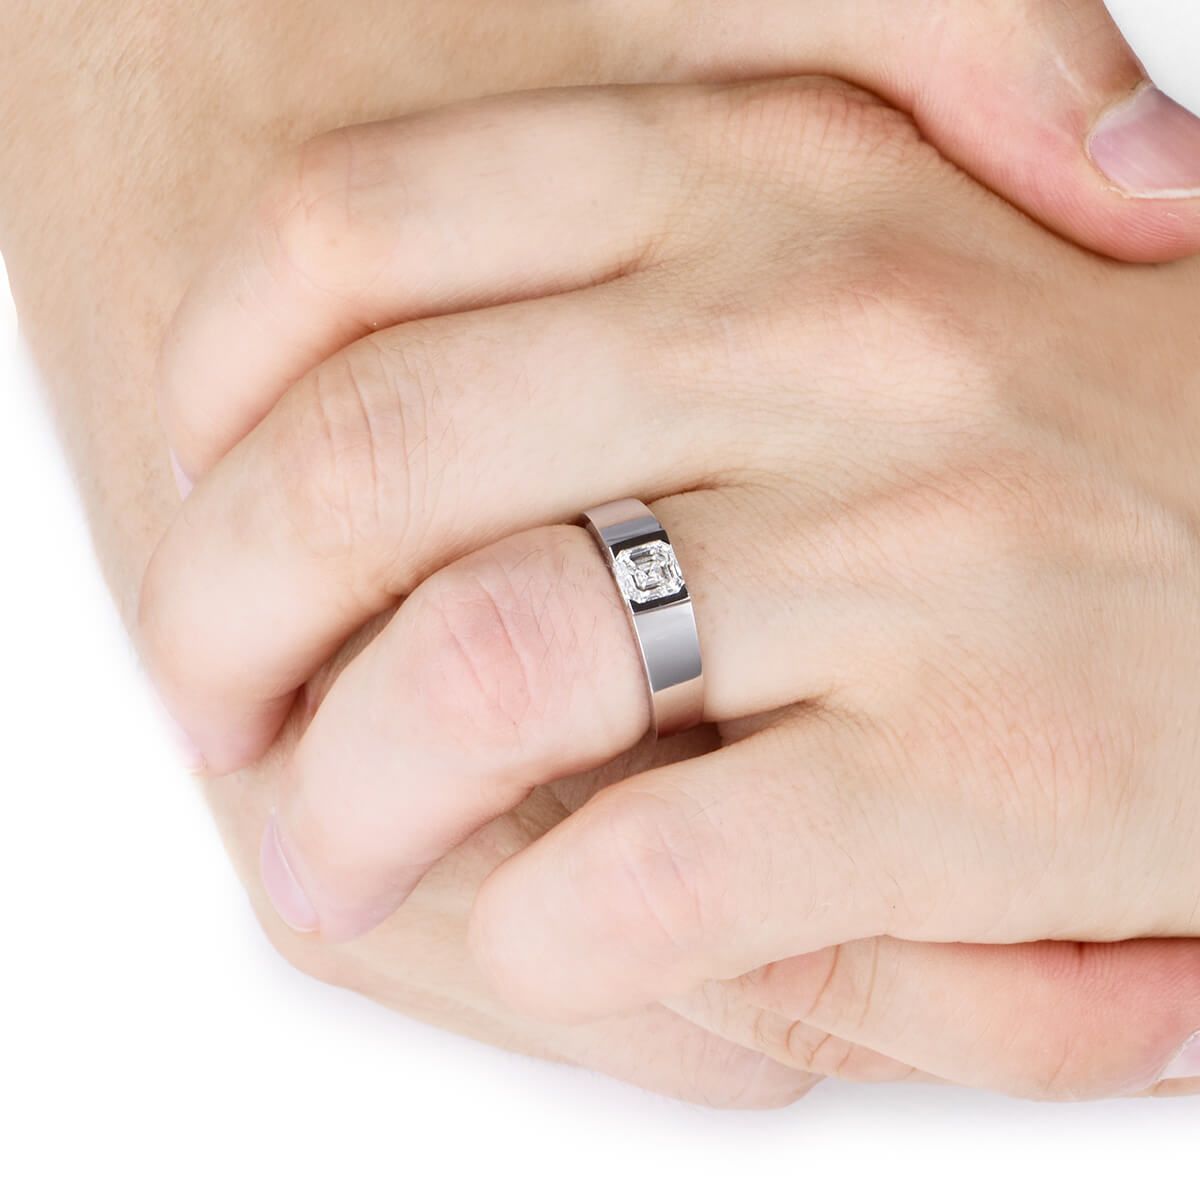  White Diamond Ring, 1.06 Carat, Asscher shape, GIA Certified, 7262340628